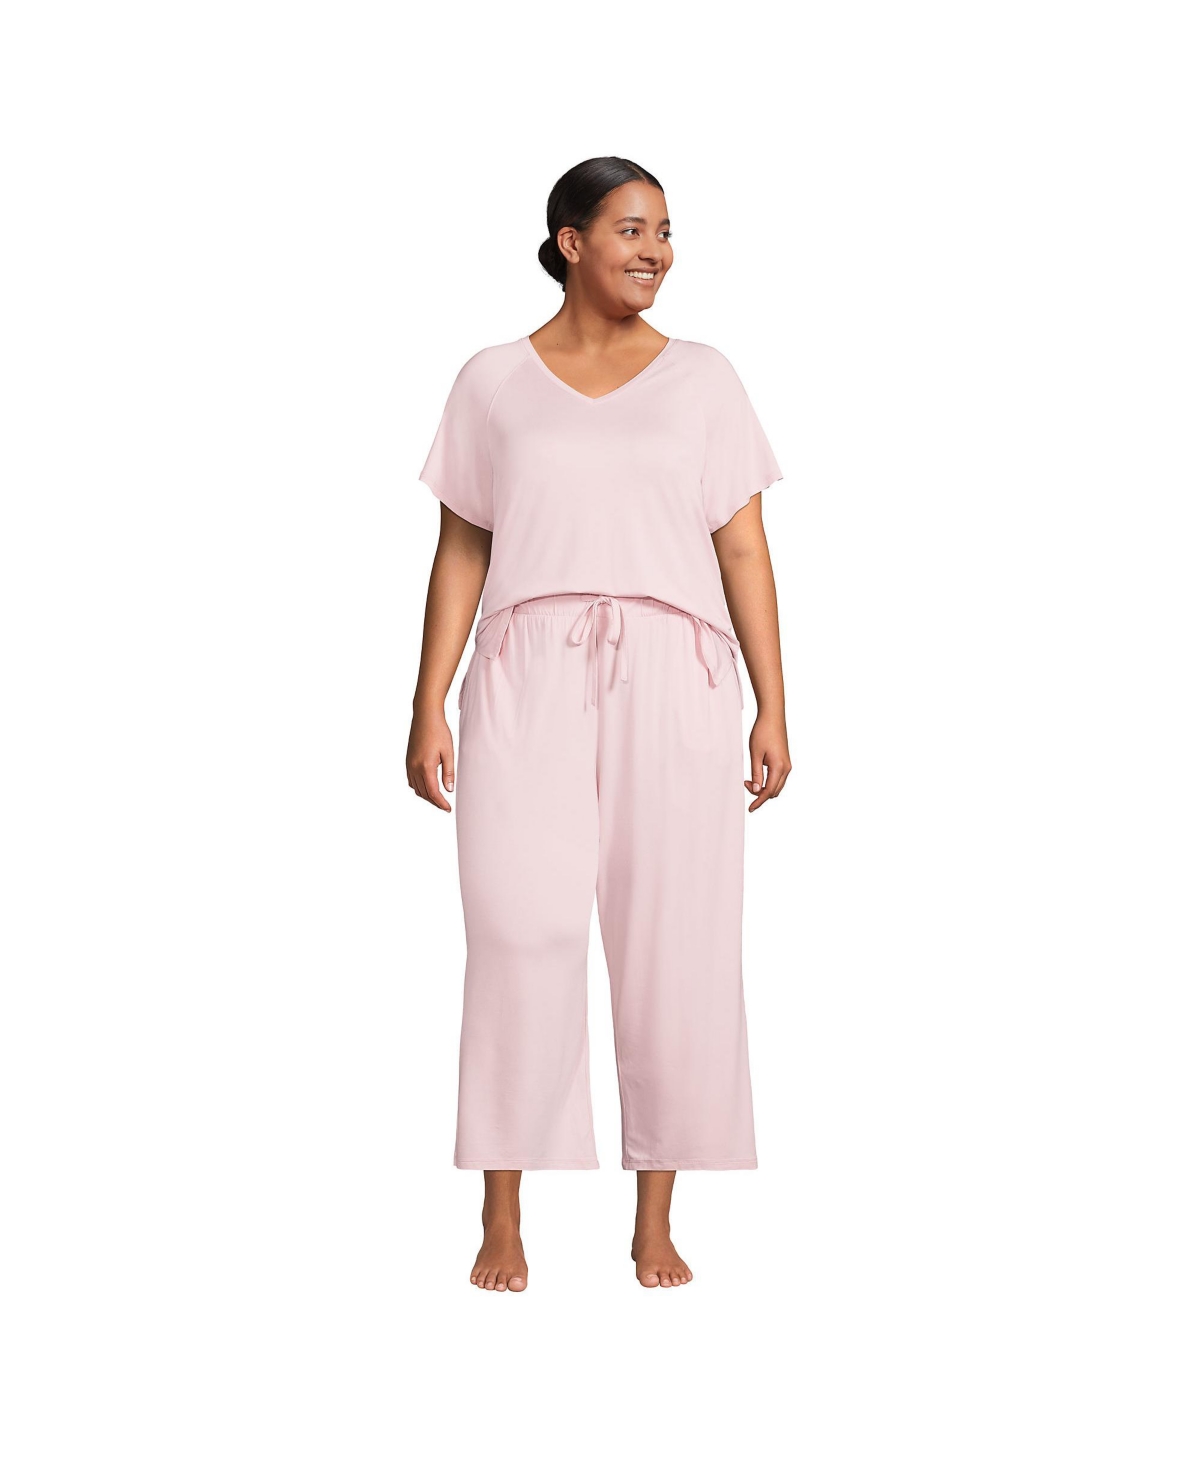 Women's Cooling Pajama Set - Short Sleeve Top and Crop Pants